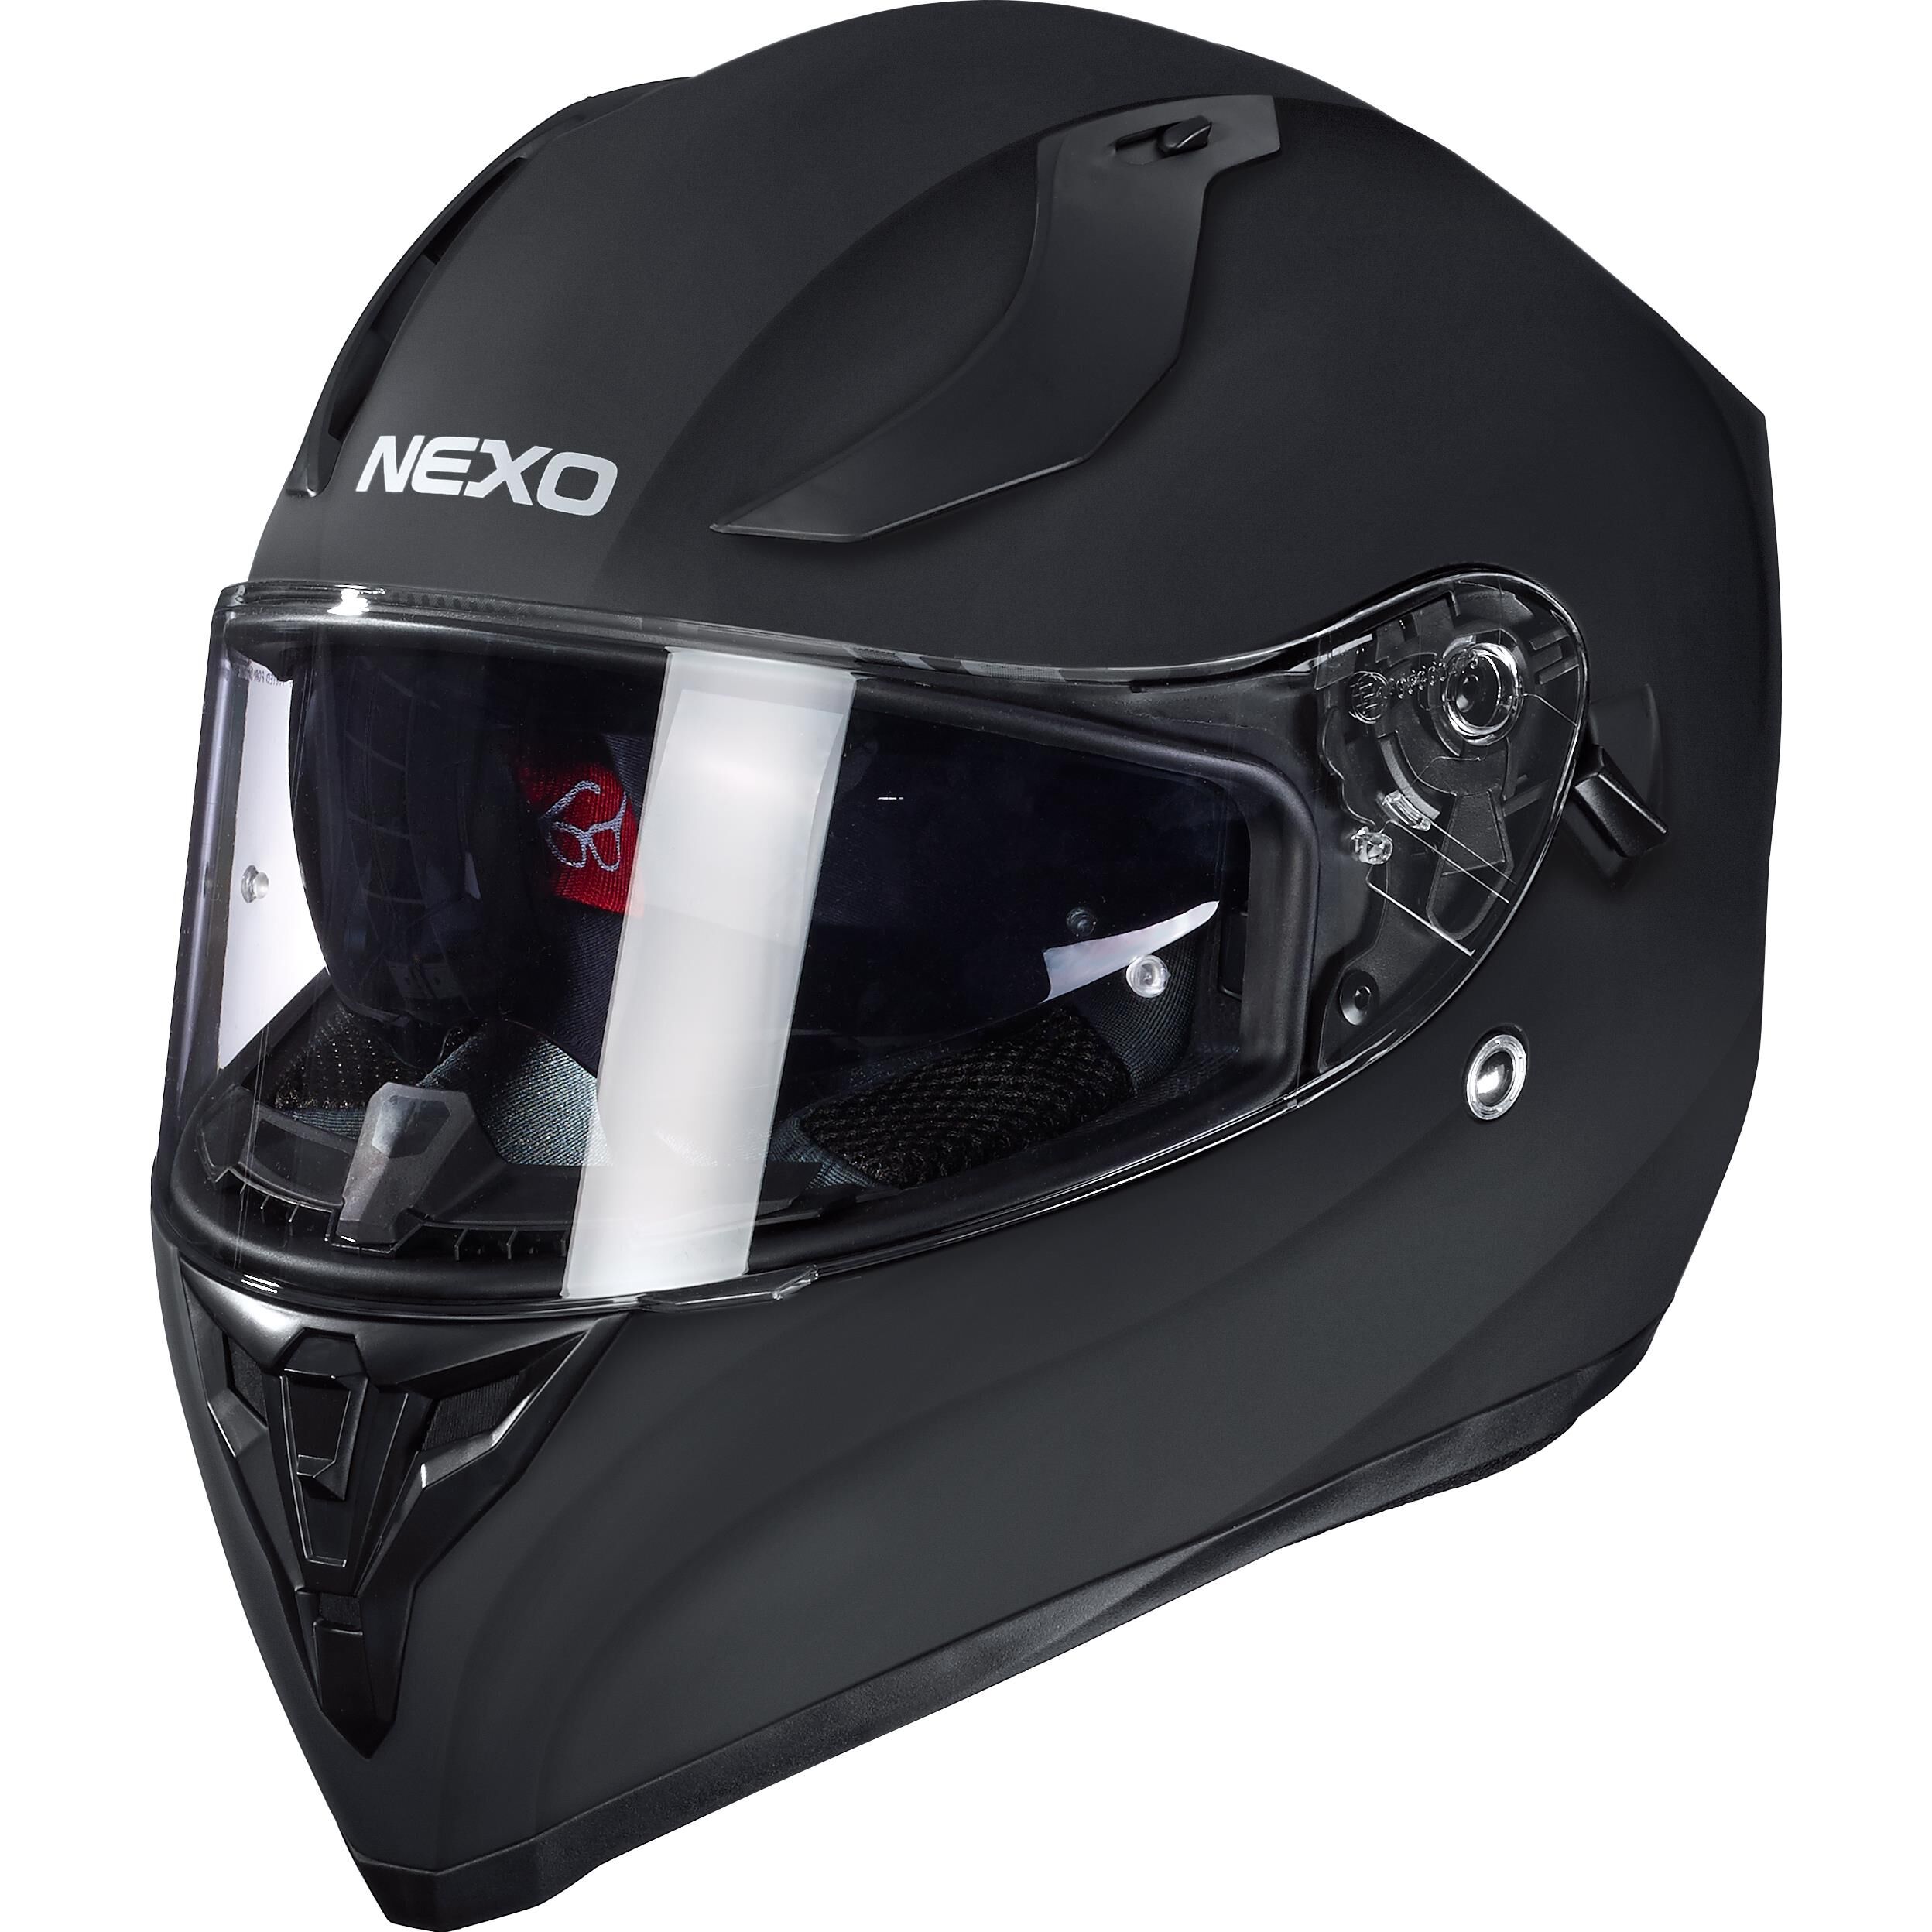 XS-XL Ratschenverschluss Nexo Integralhelm Motorradhelm Helm Motorrad Mopedhelm Sport II verschiedene Dekore klares Visier herausnehmbare Polster Windabweiser Be- Entlüftung 